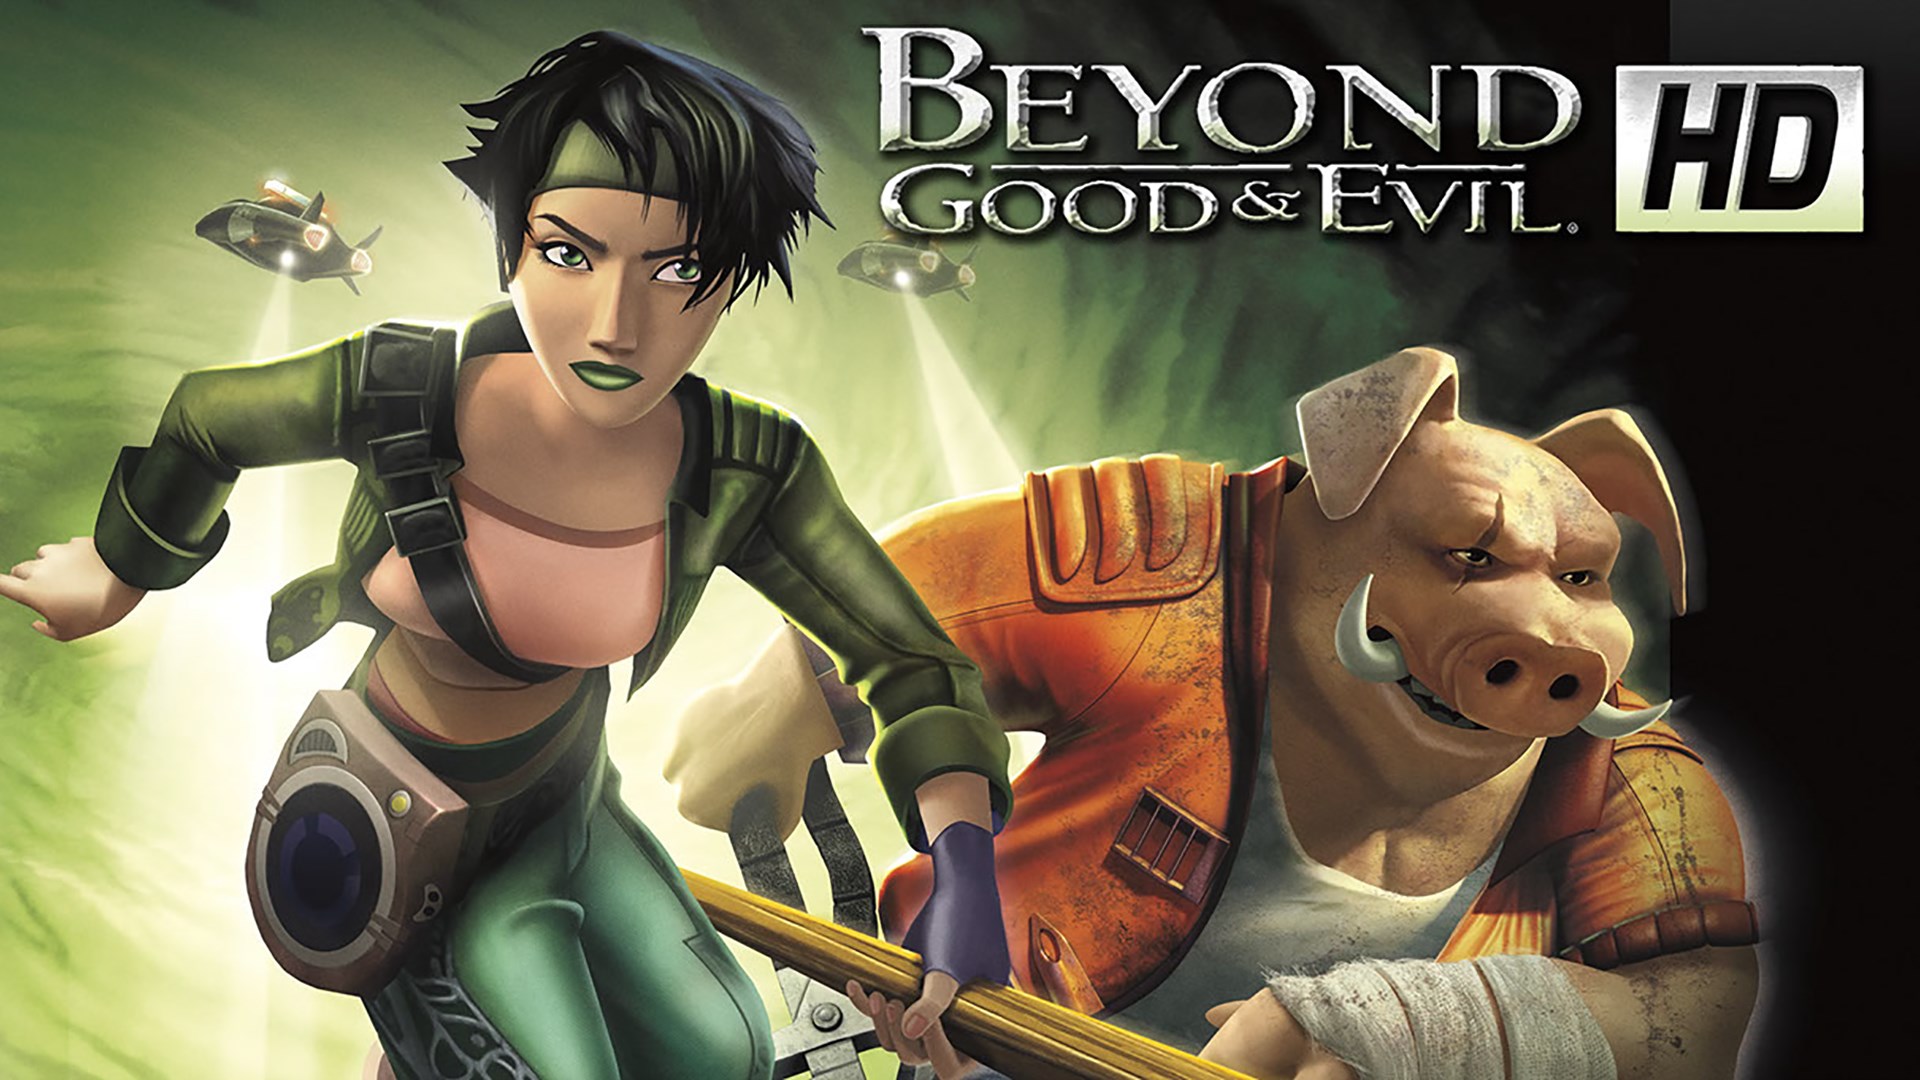 Beyond Good & Evil (video game) - Wikipedia